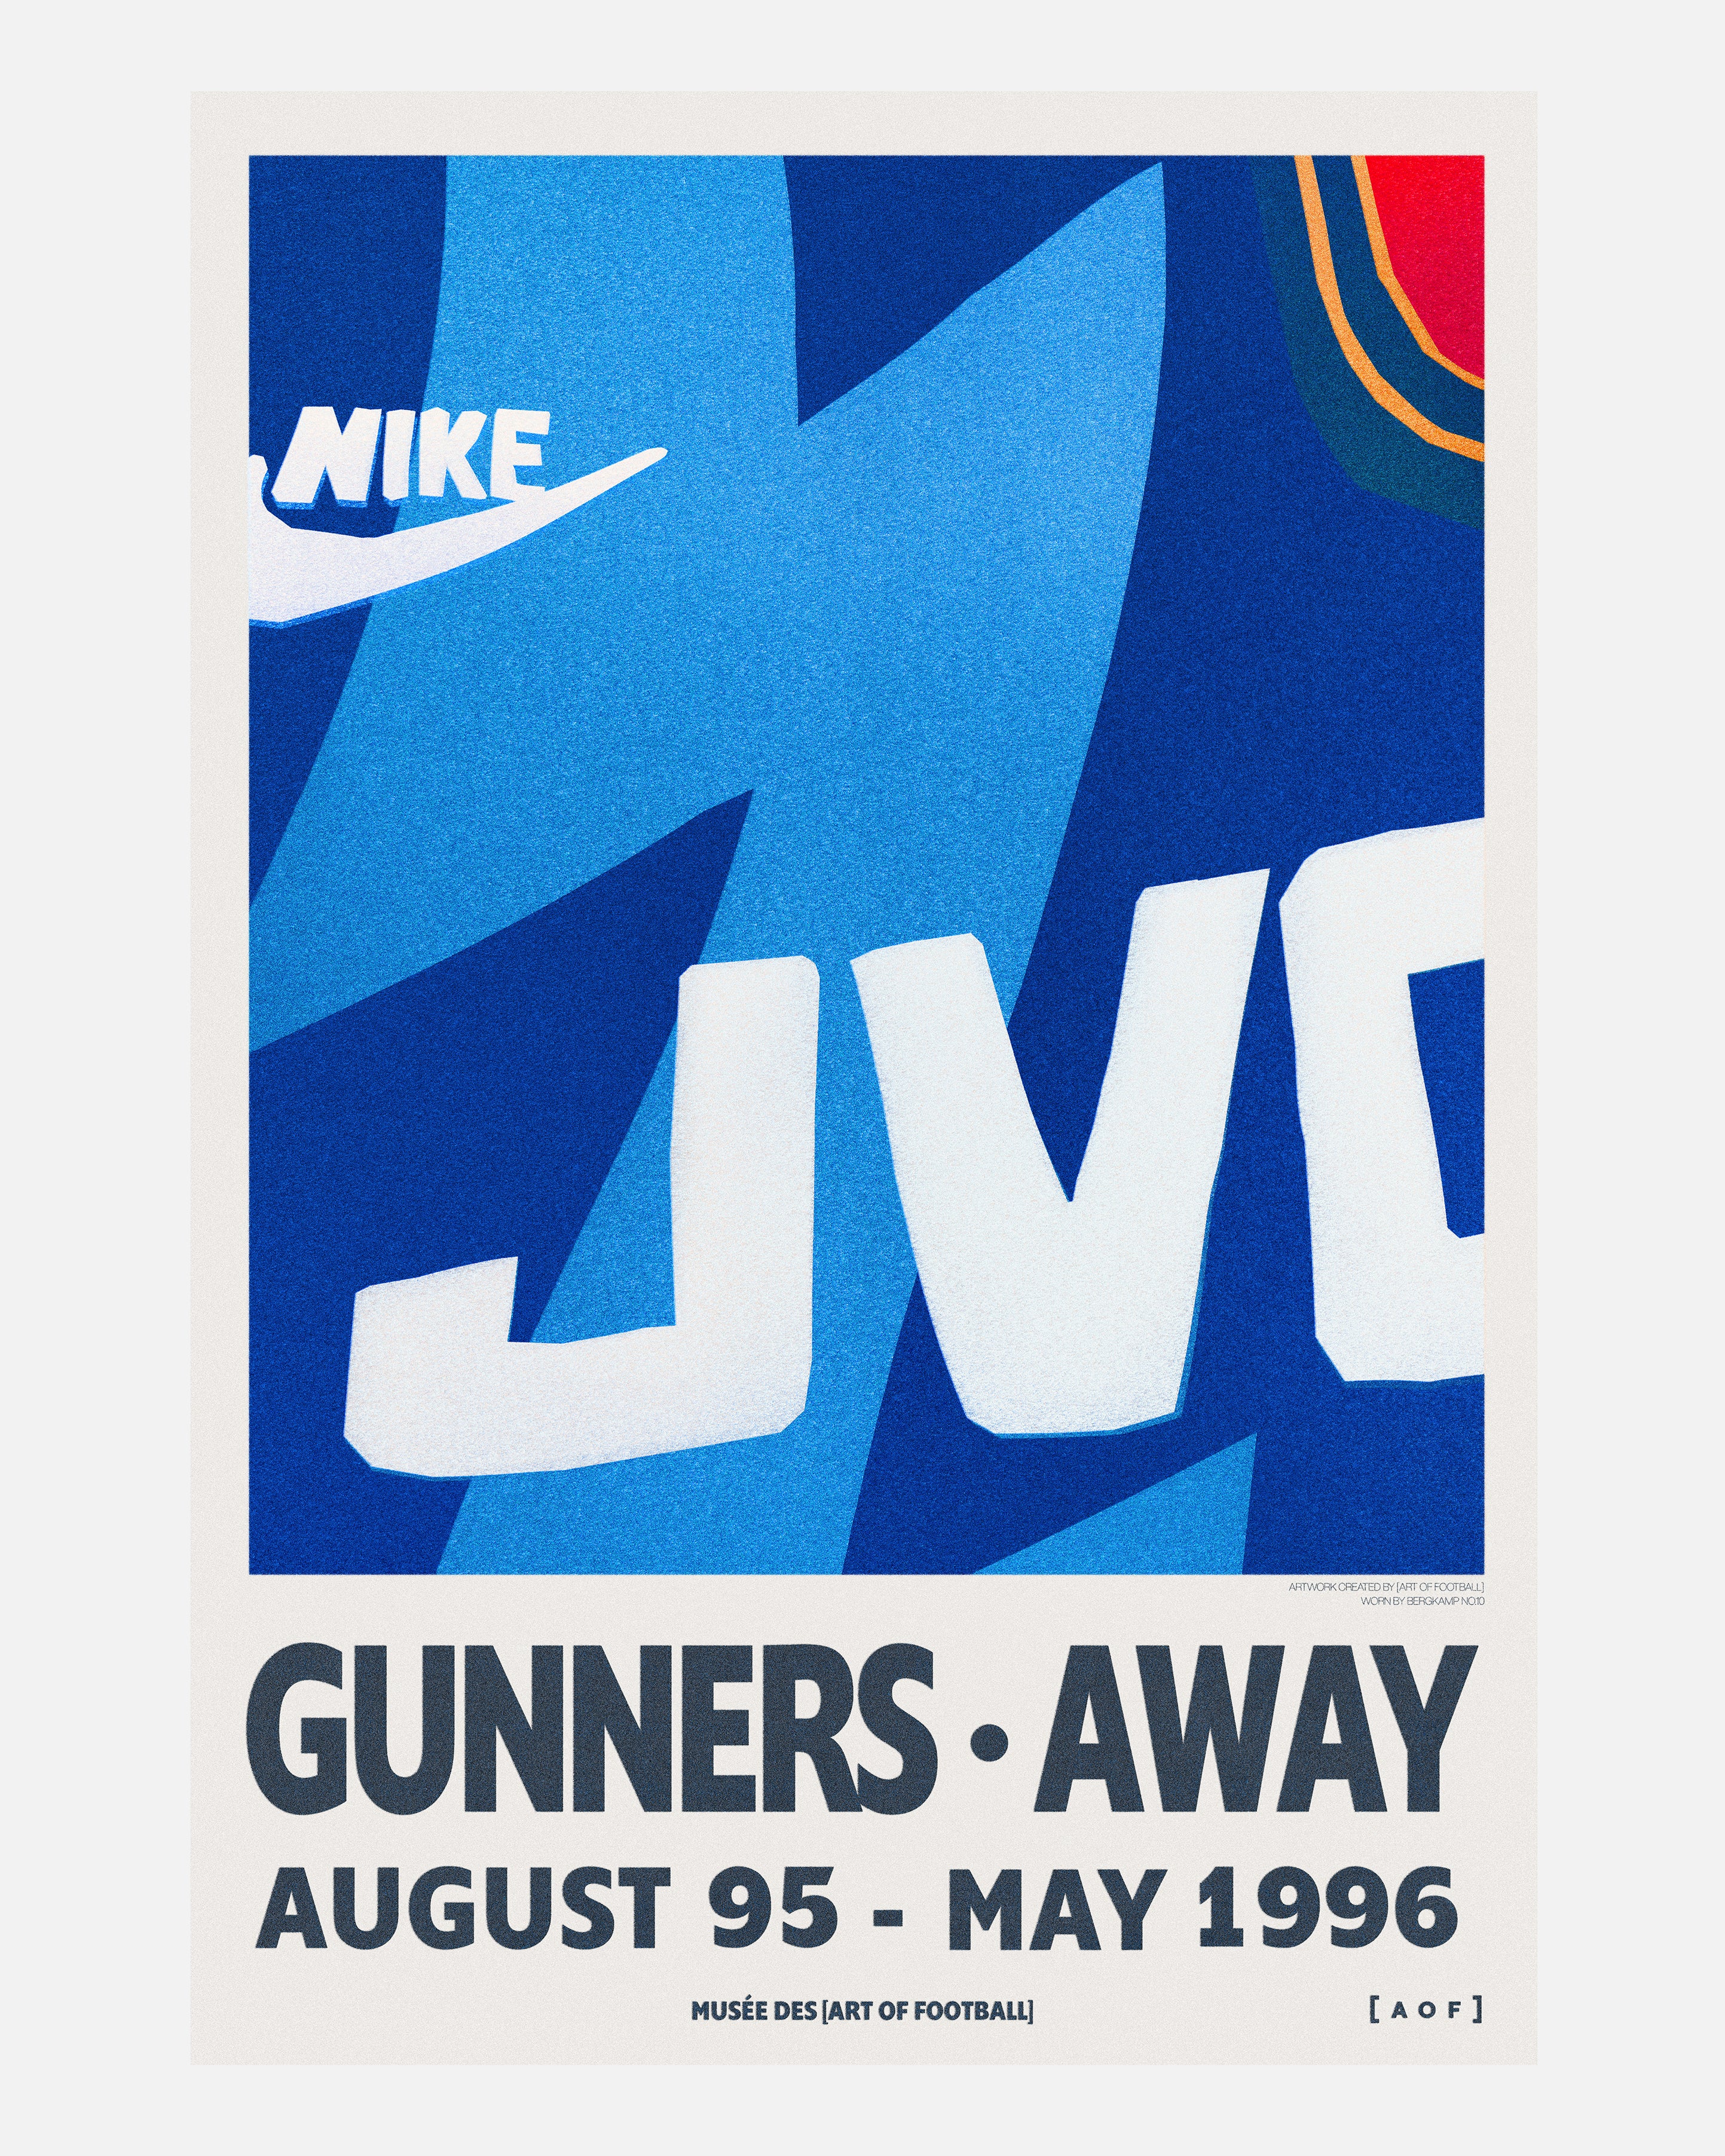 Gunners 95/96 - Print